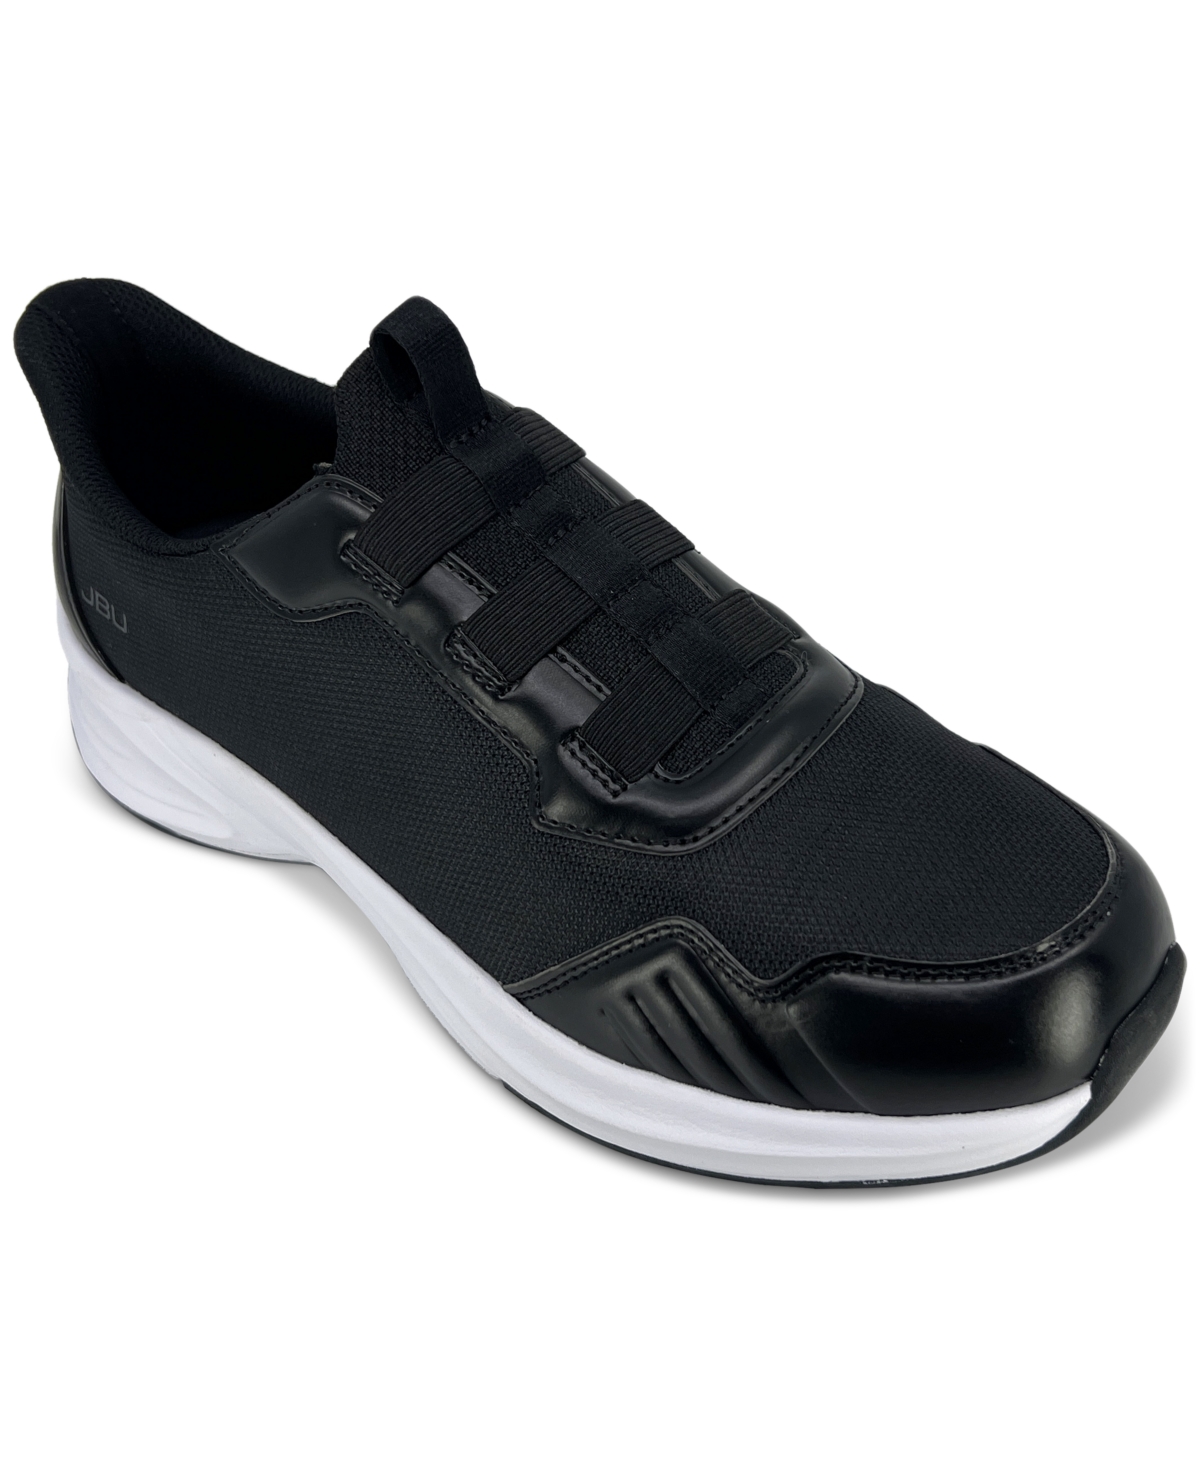 Men's Dash Touch-Less Slip-On Sneakers - Black